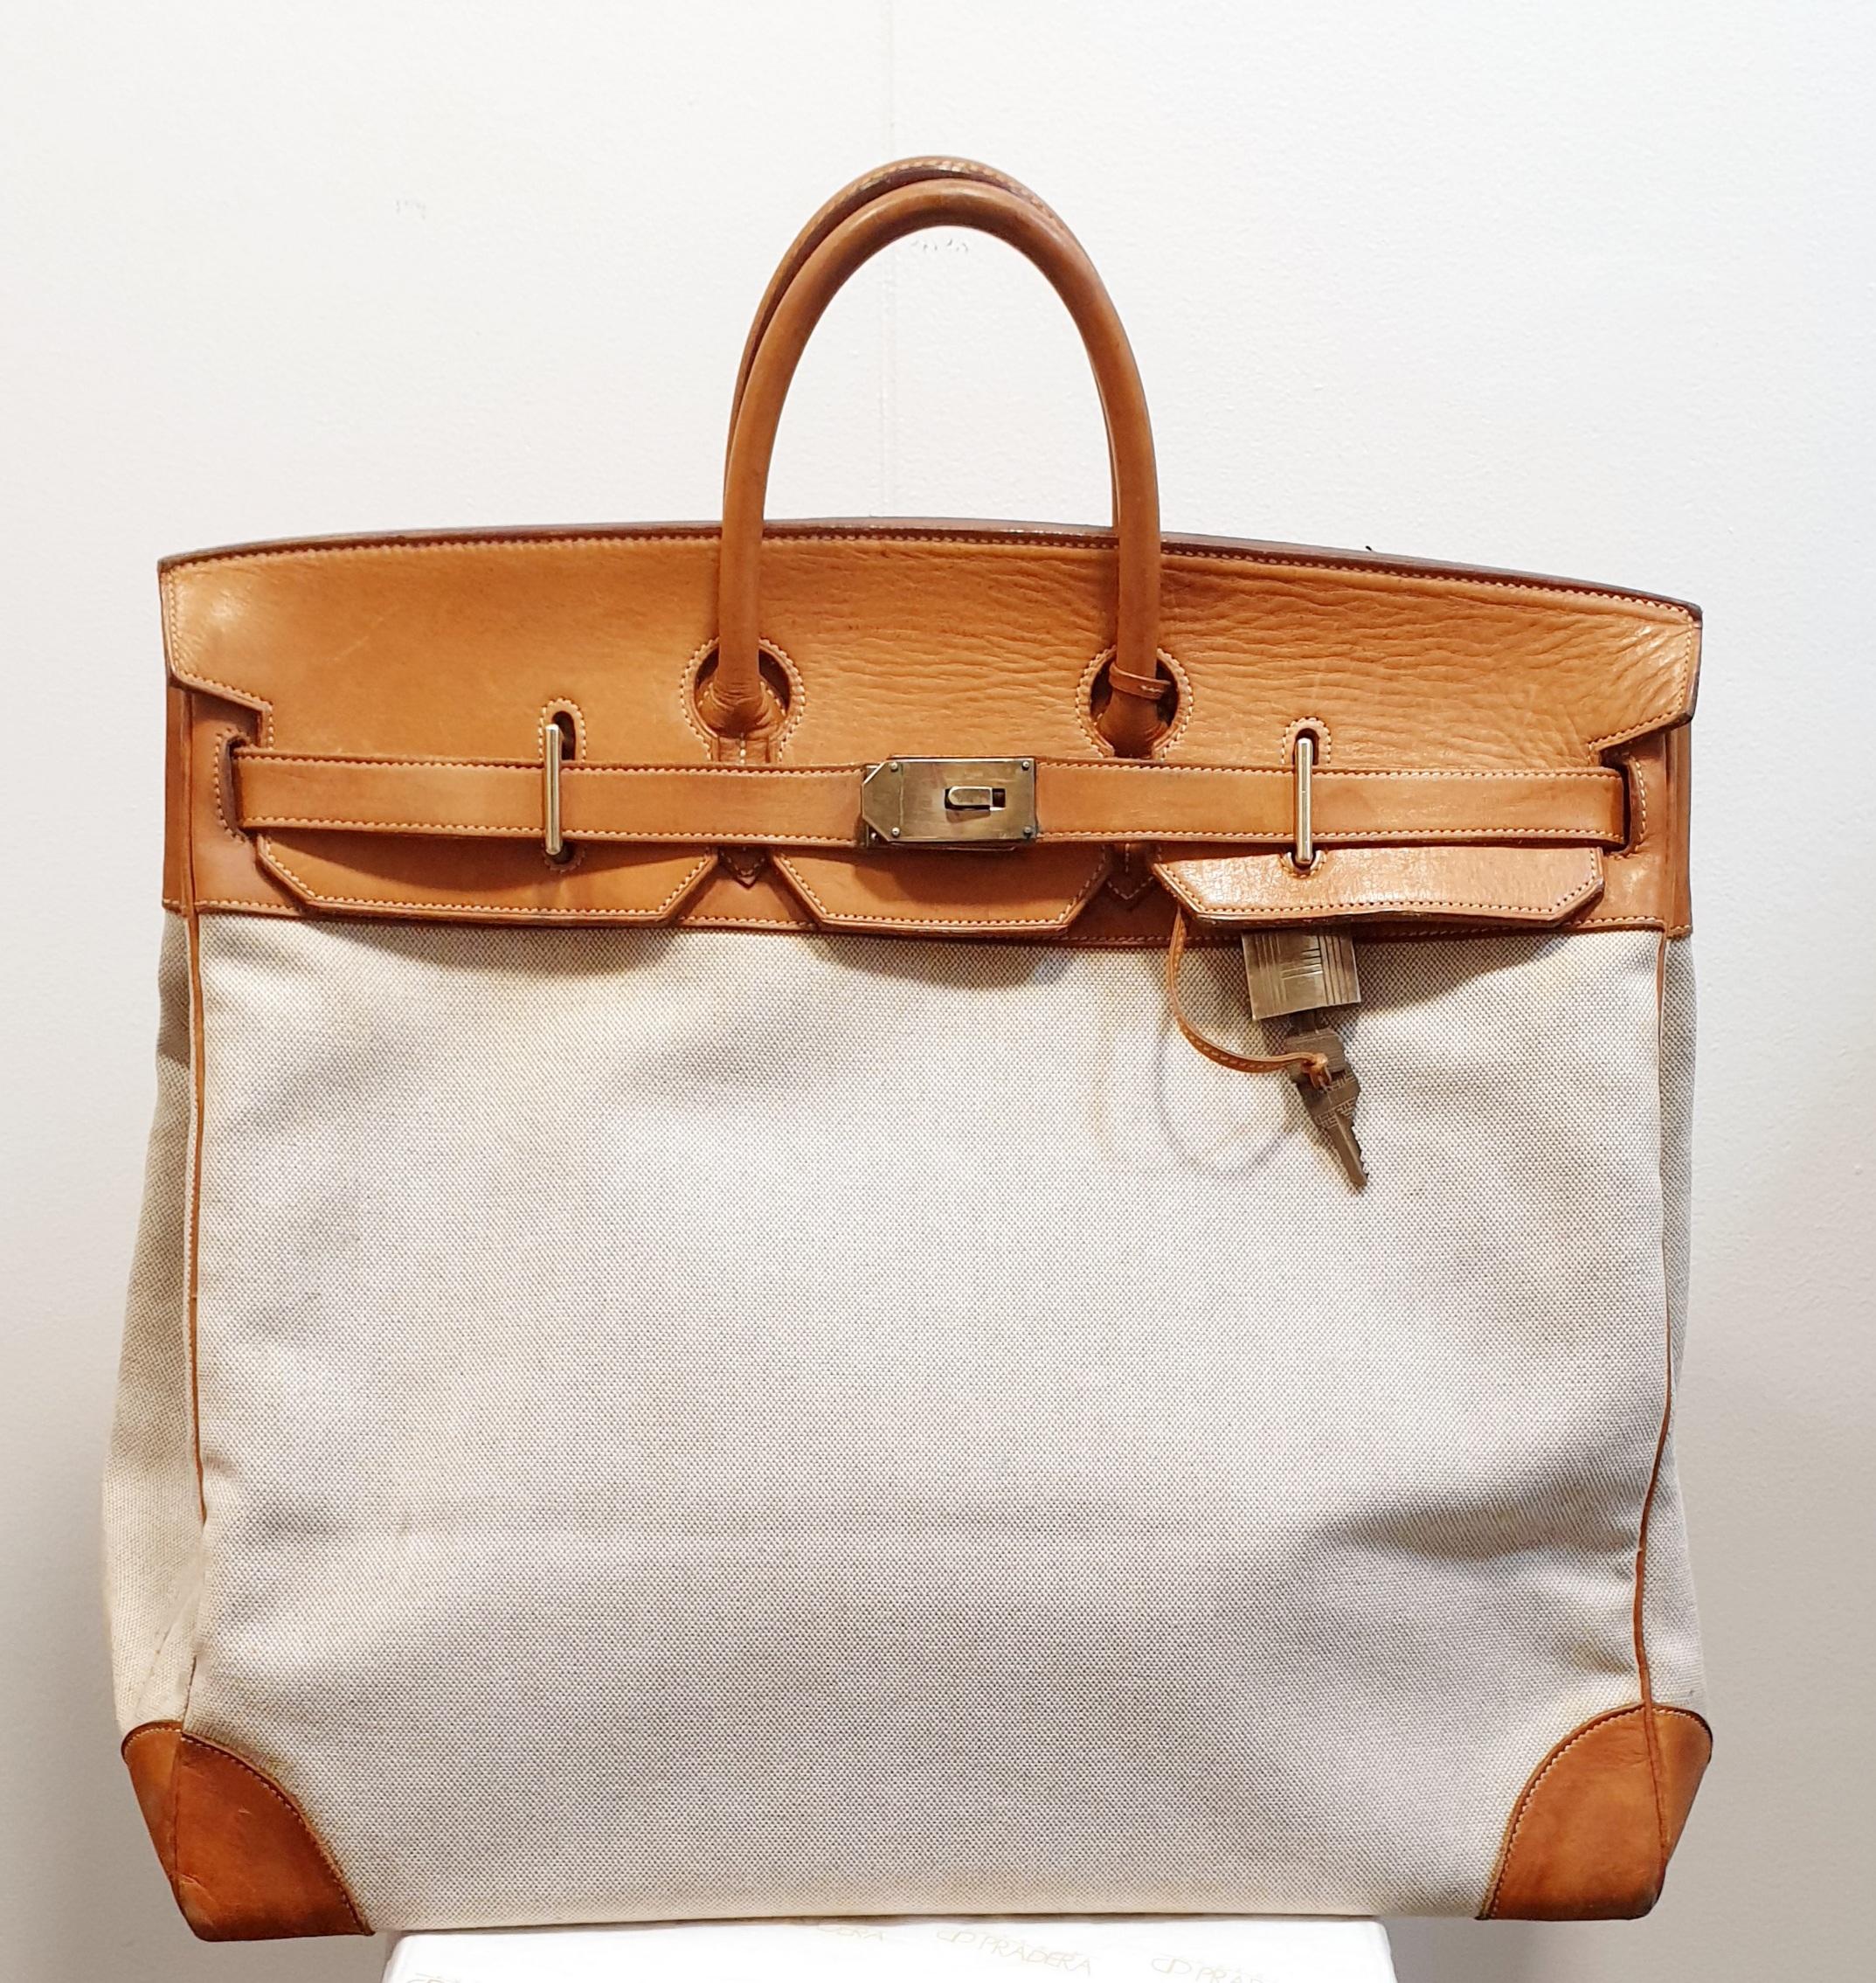 Hermes Travel Bag in Beige Canvas and Brown Leather. Vintage
Elegant 